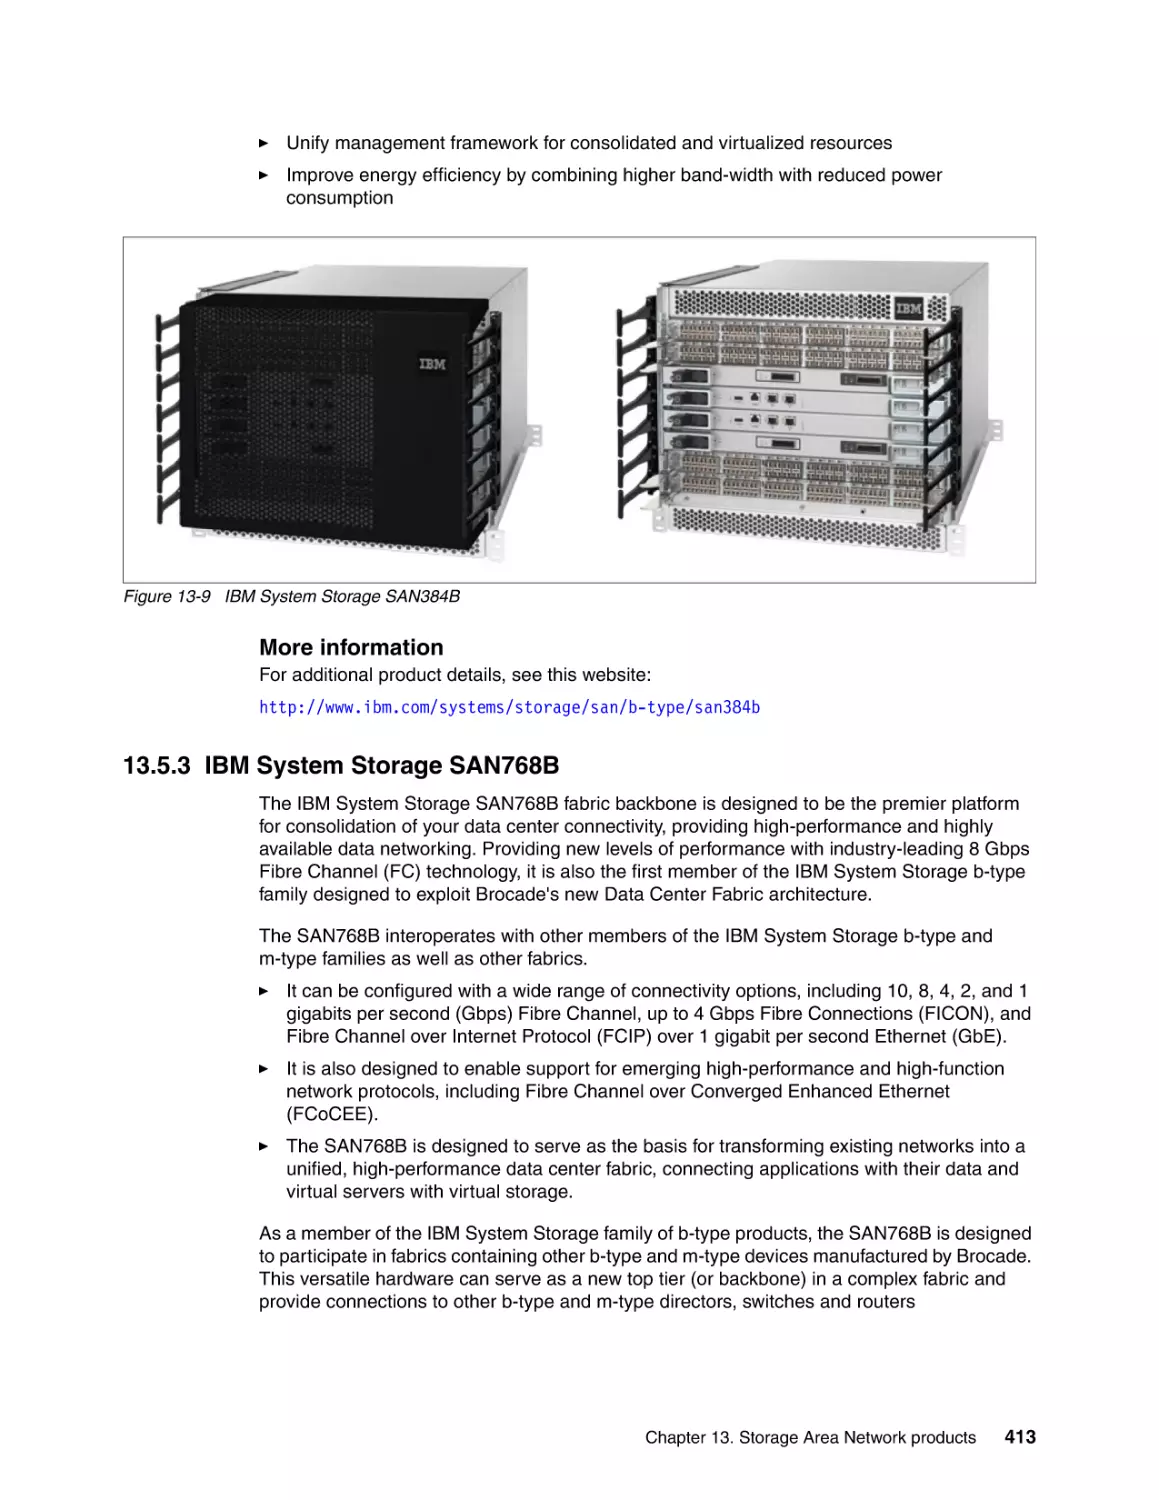 13.5.3 IBM System Storage SAN768B